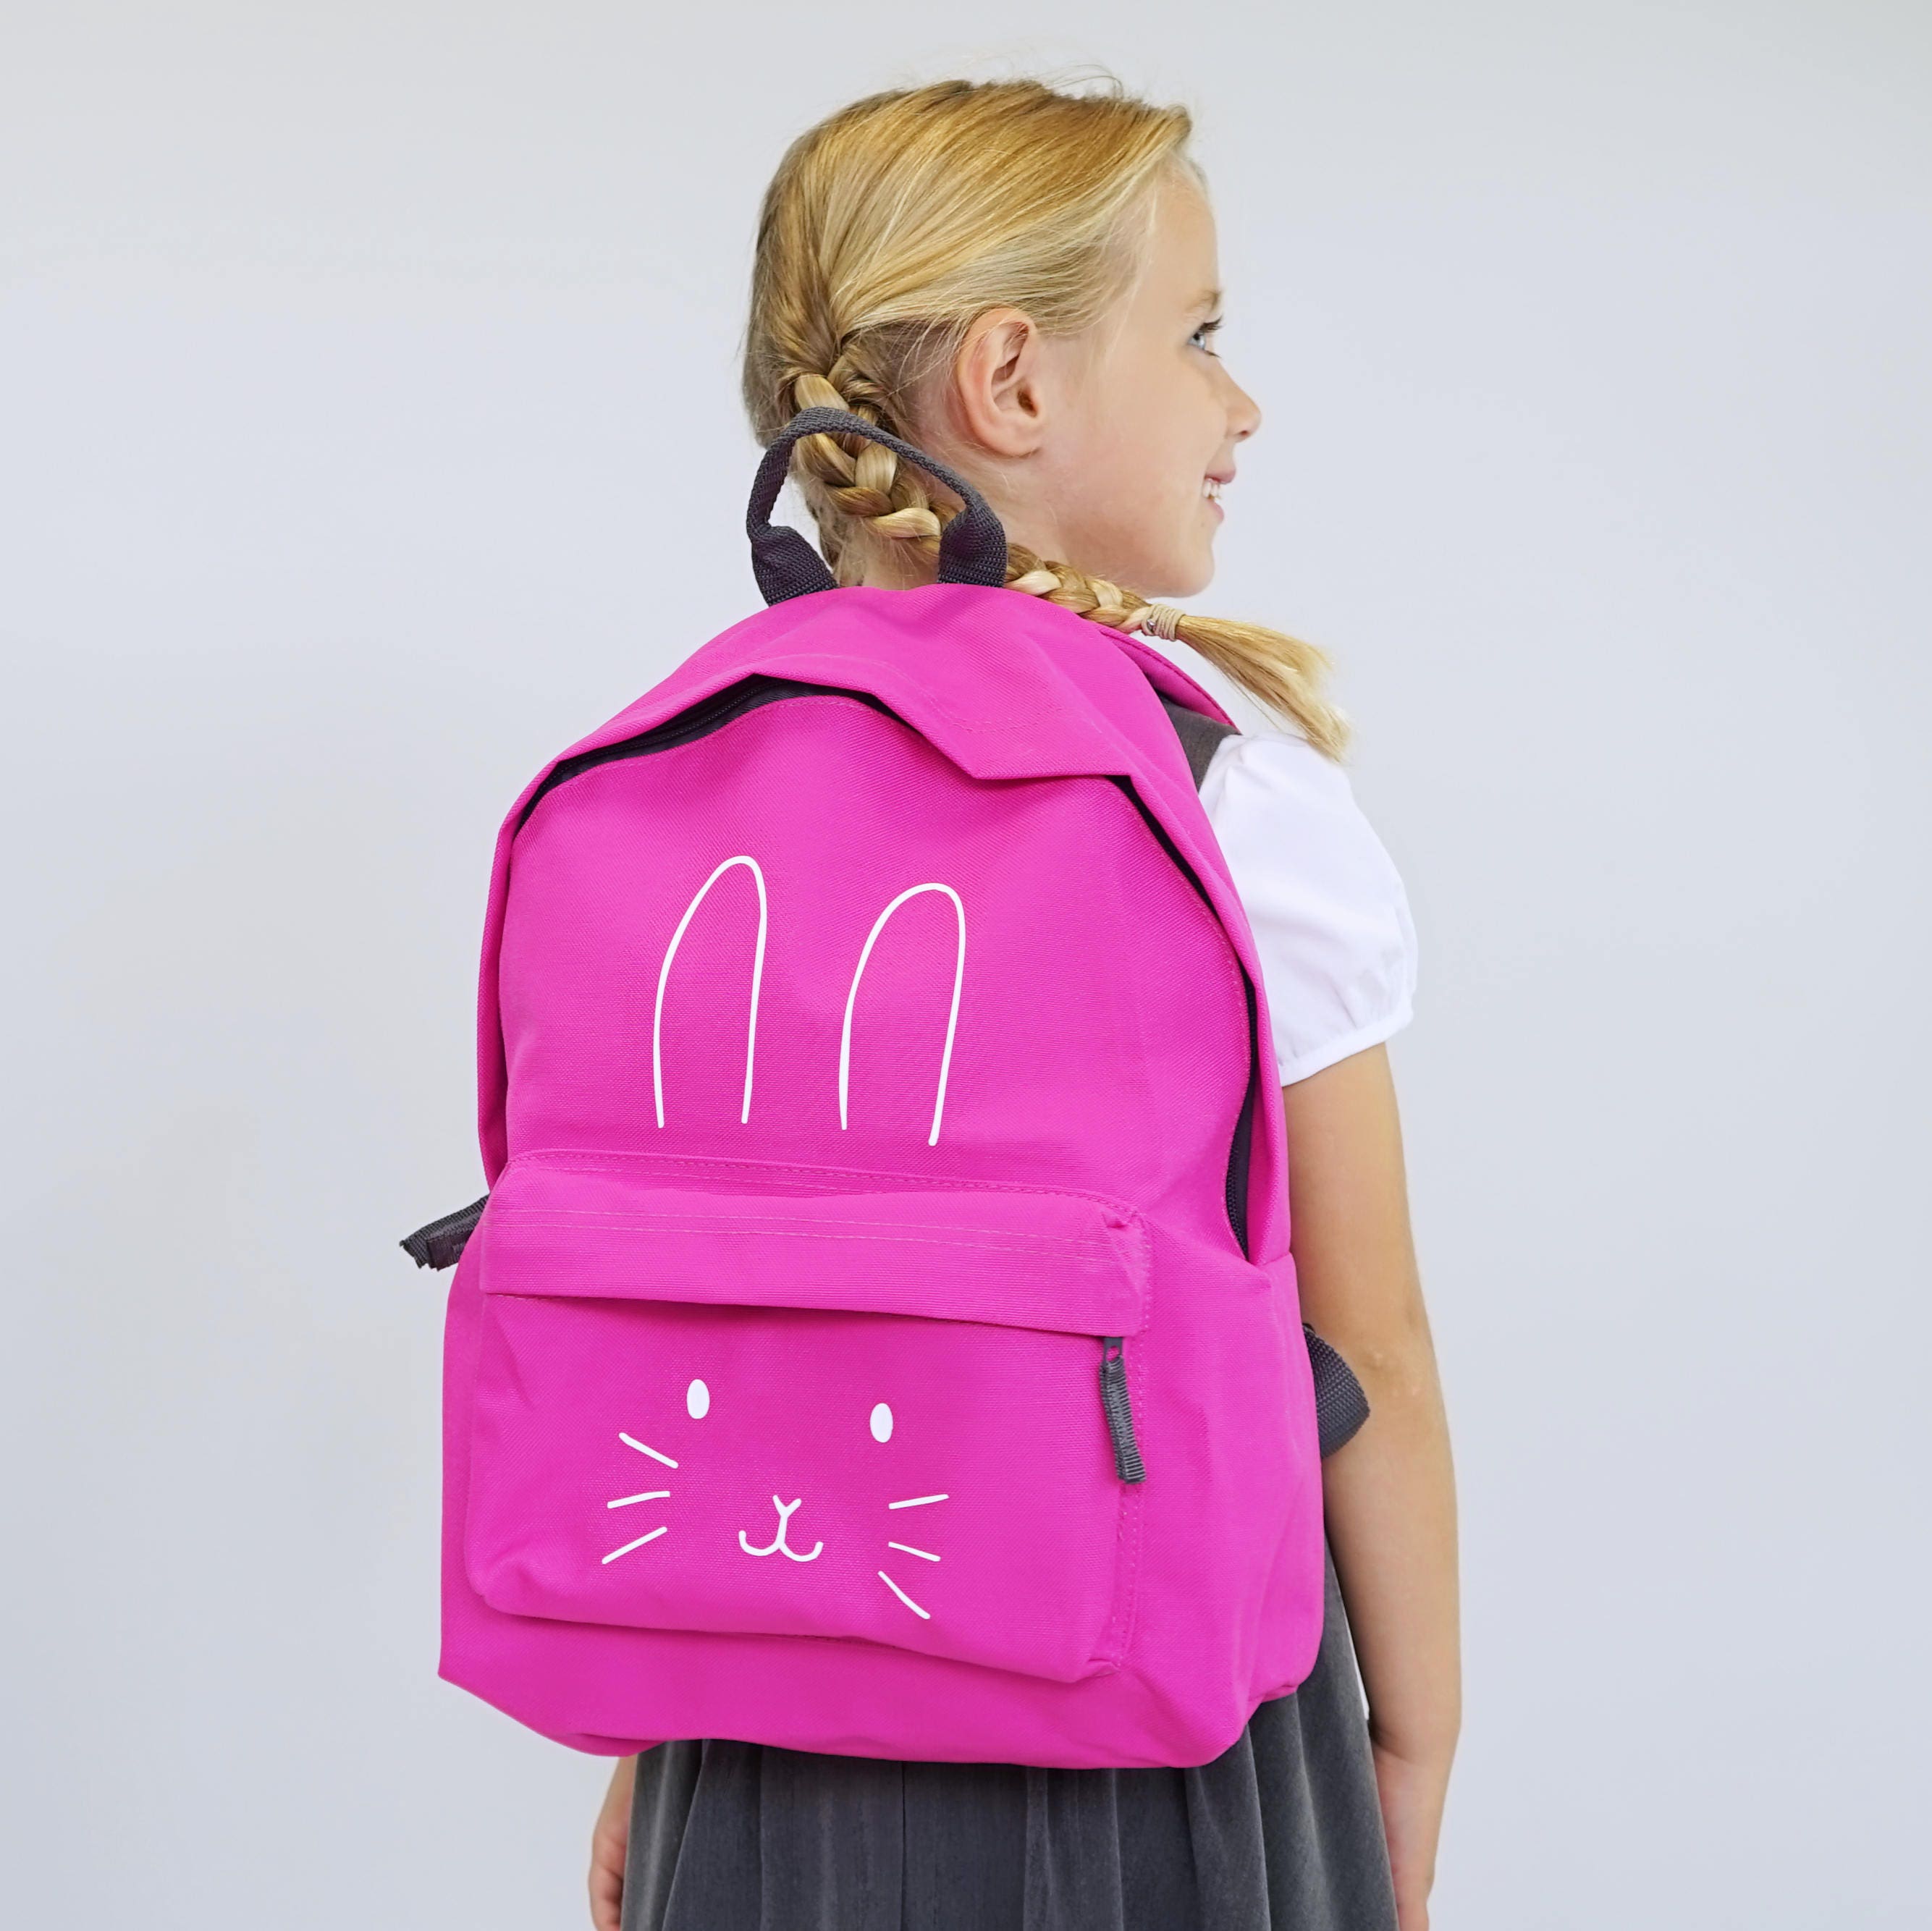 Bunny Backpack, Cute Mini Backpacks for Girls Plush Rabbit Ear